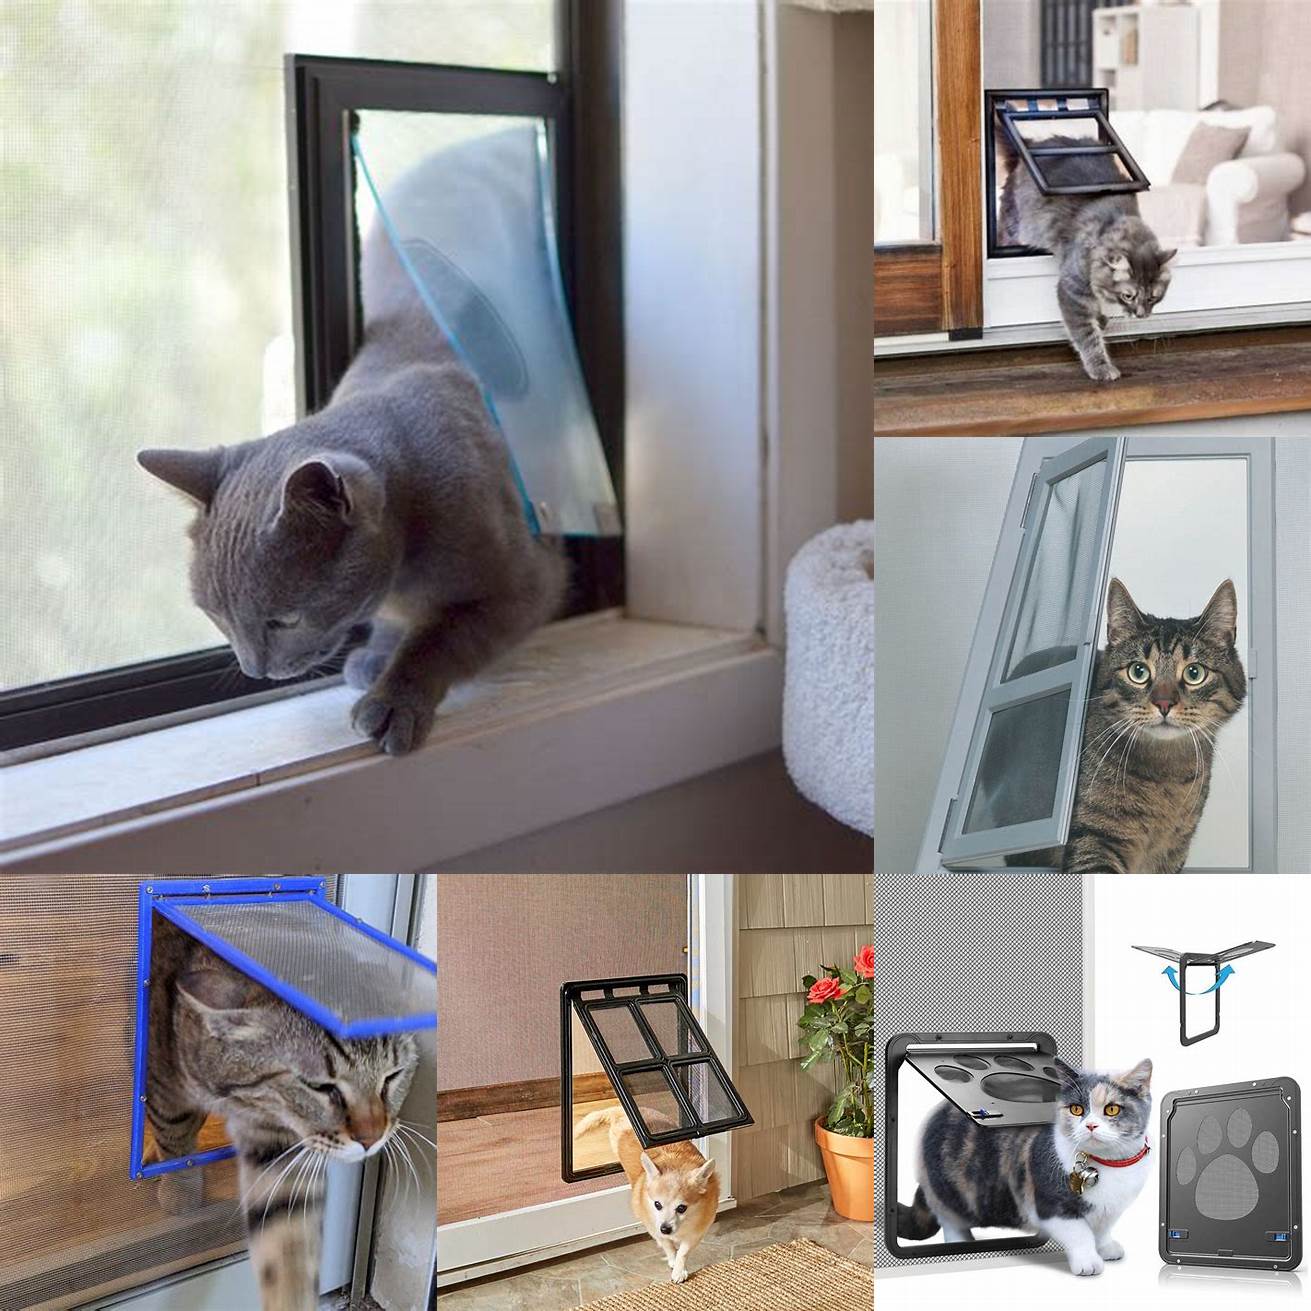 Clean the cat door for screen regularly to prevent dirt and debris buildup